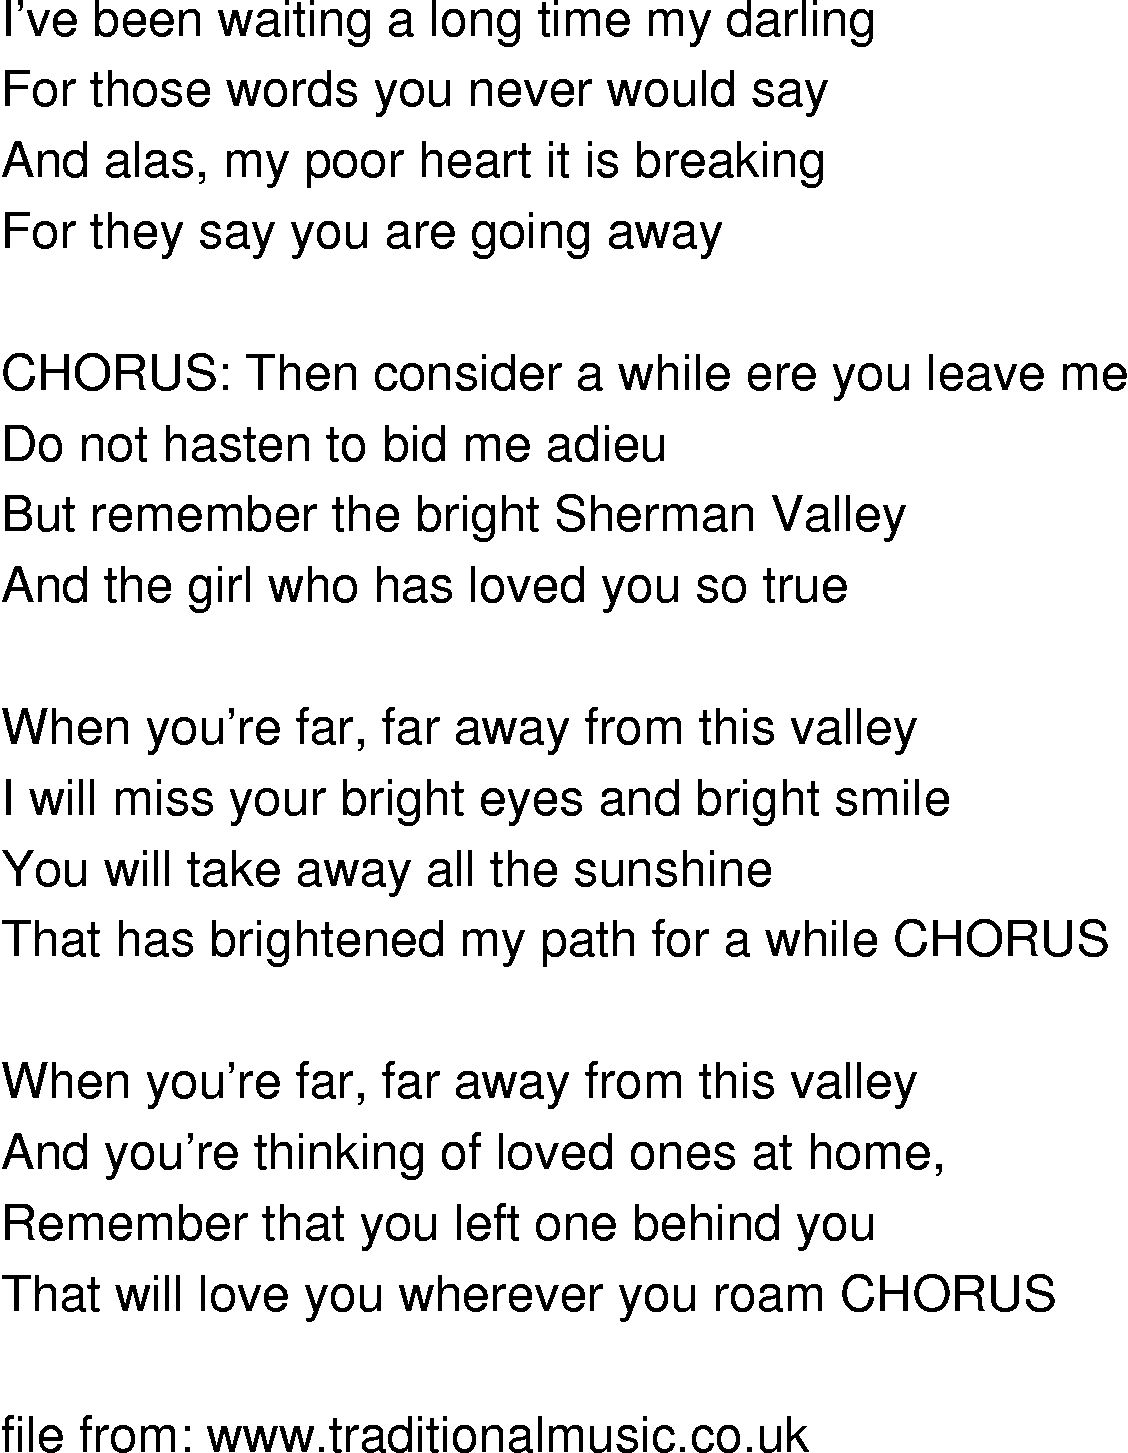 Old-Time (oldtimey) Song Lyrics - sherman valley